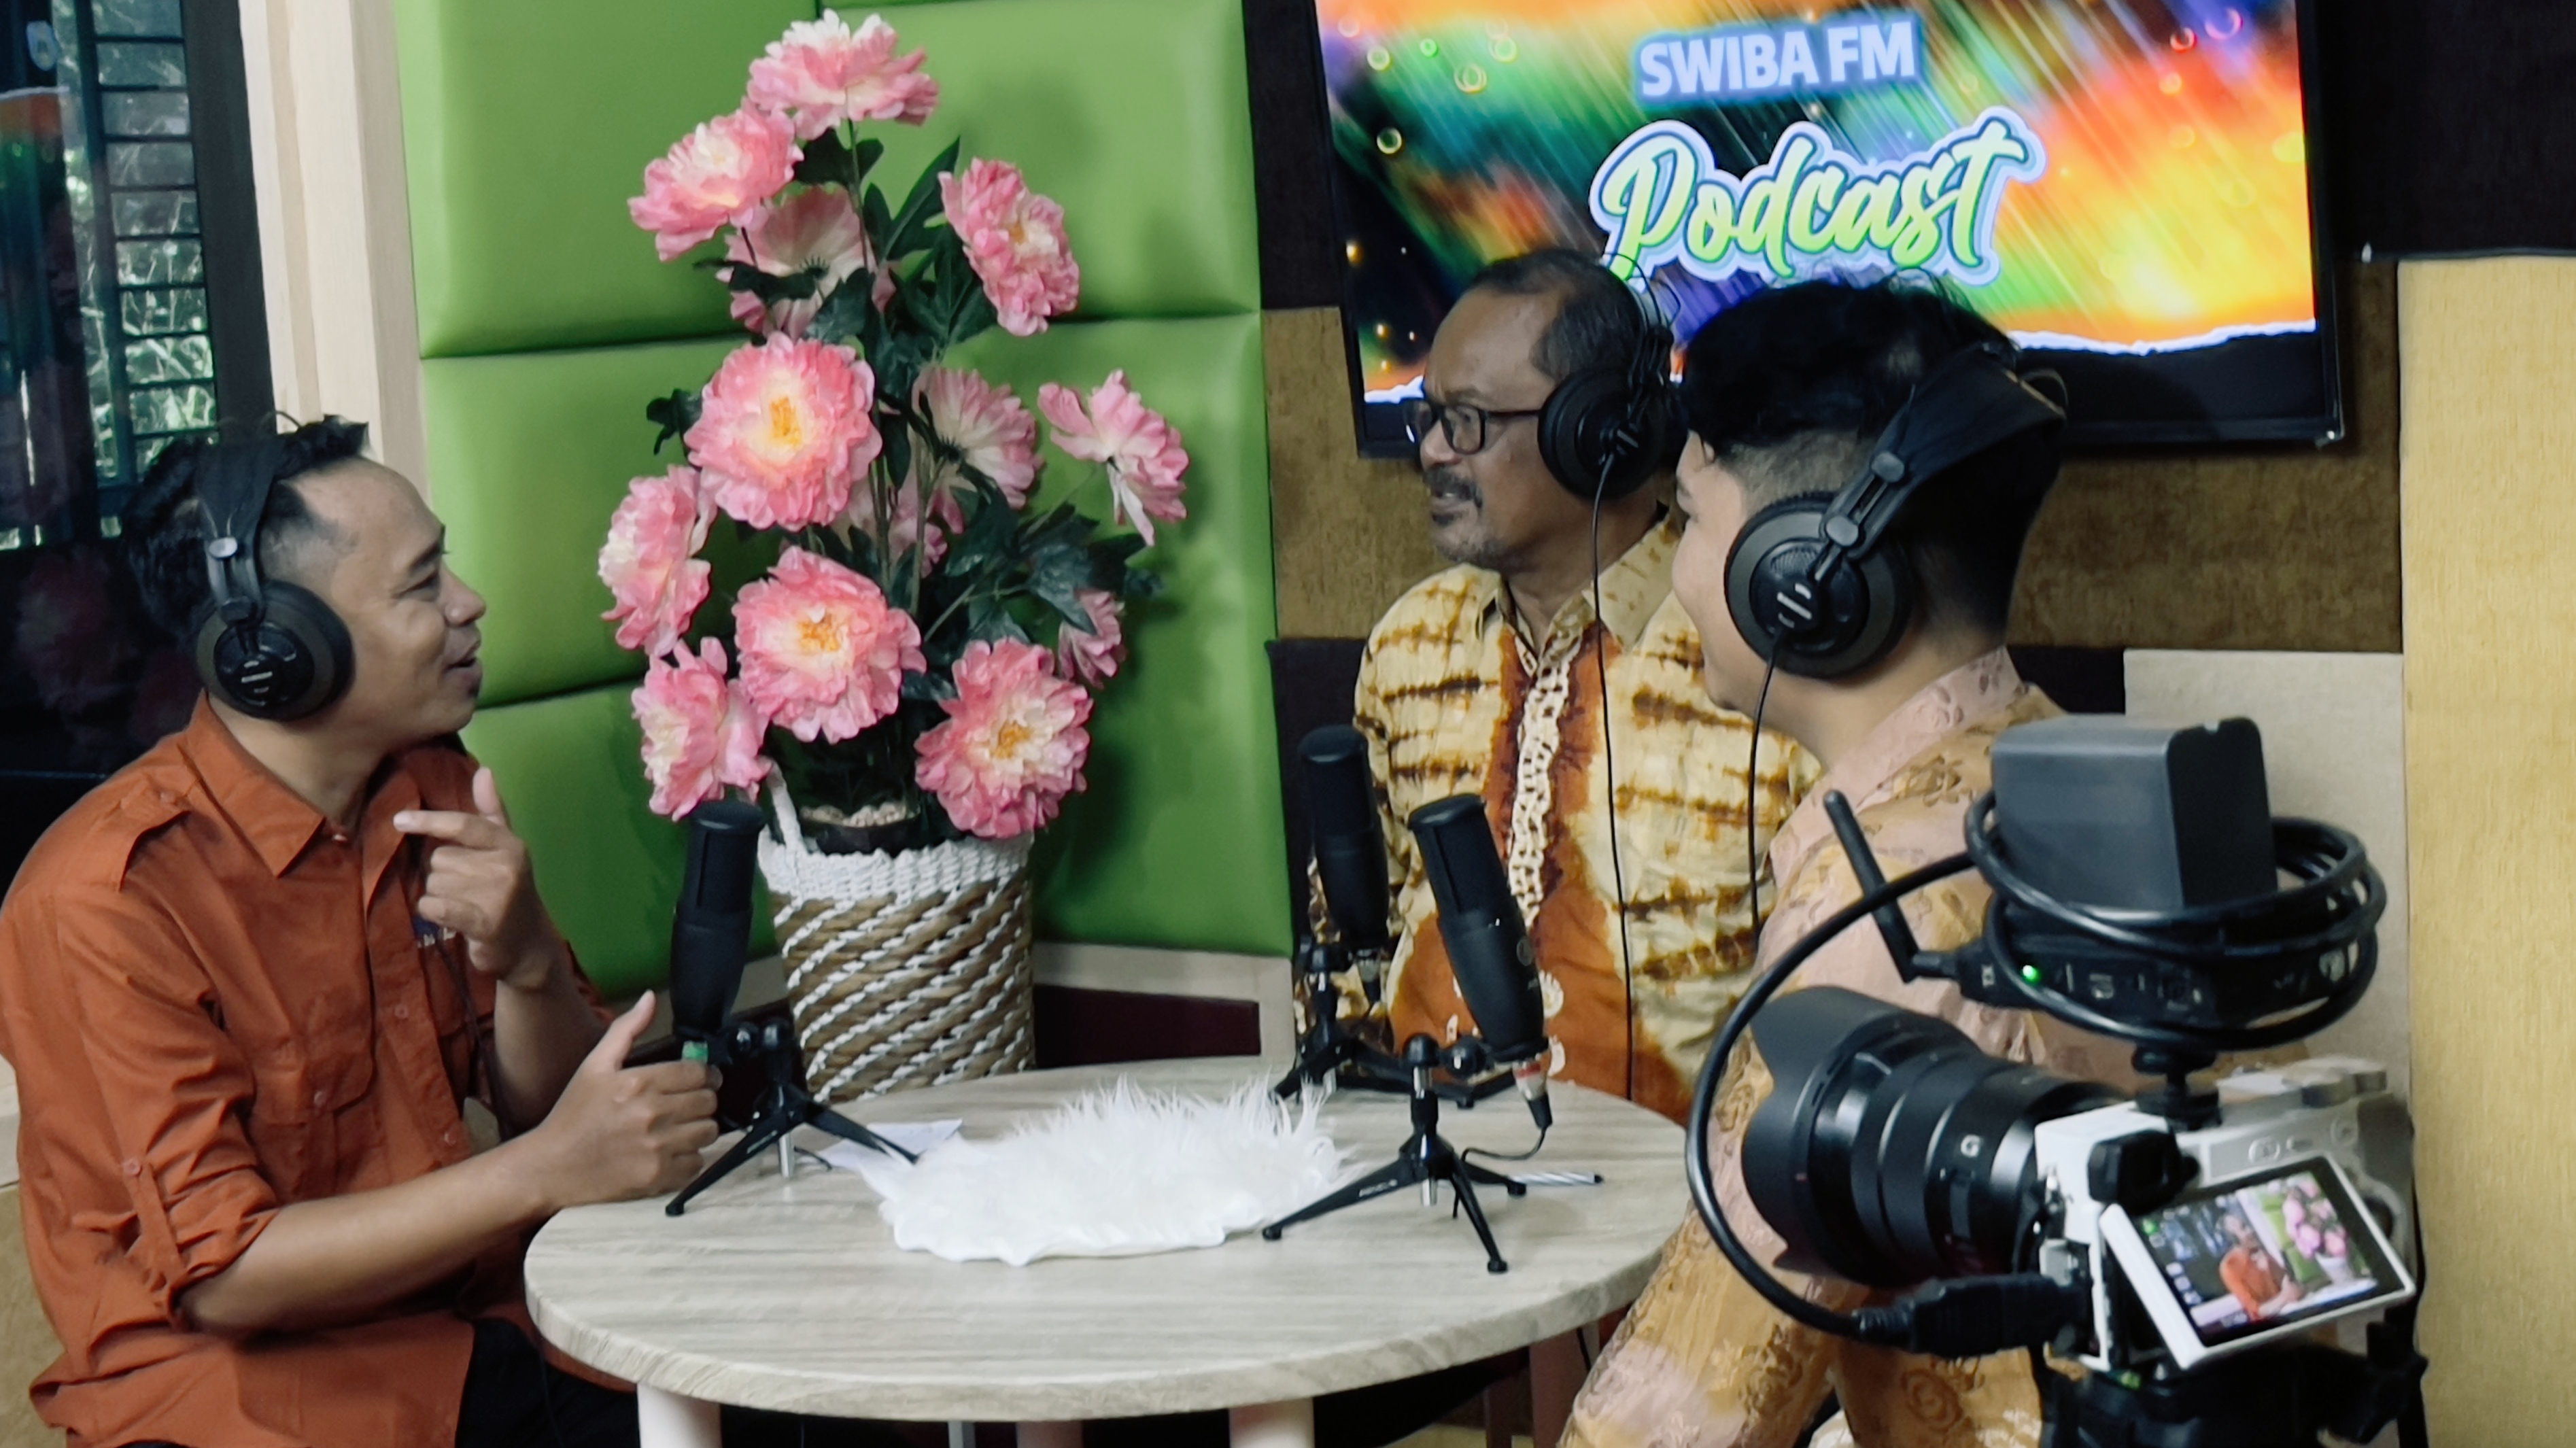 LPPL Tuntung Pandang FM Tala Kunjungi LPPL Radio Swiba Karanganyar